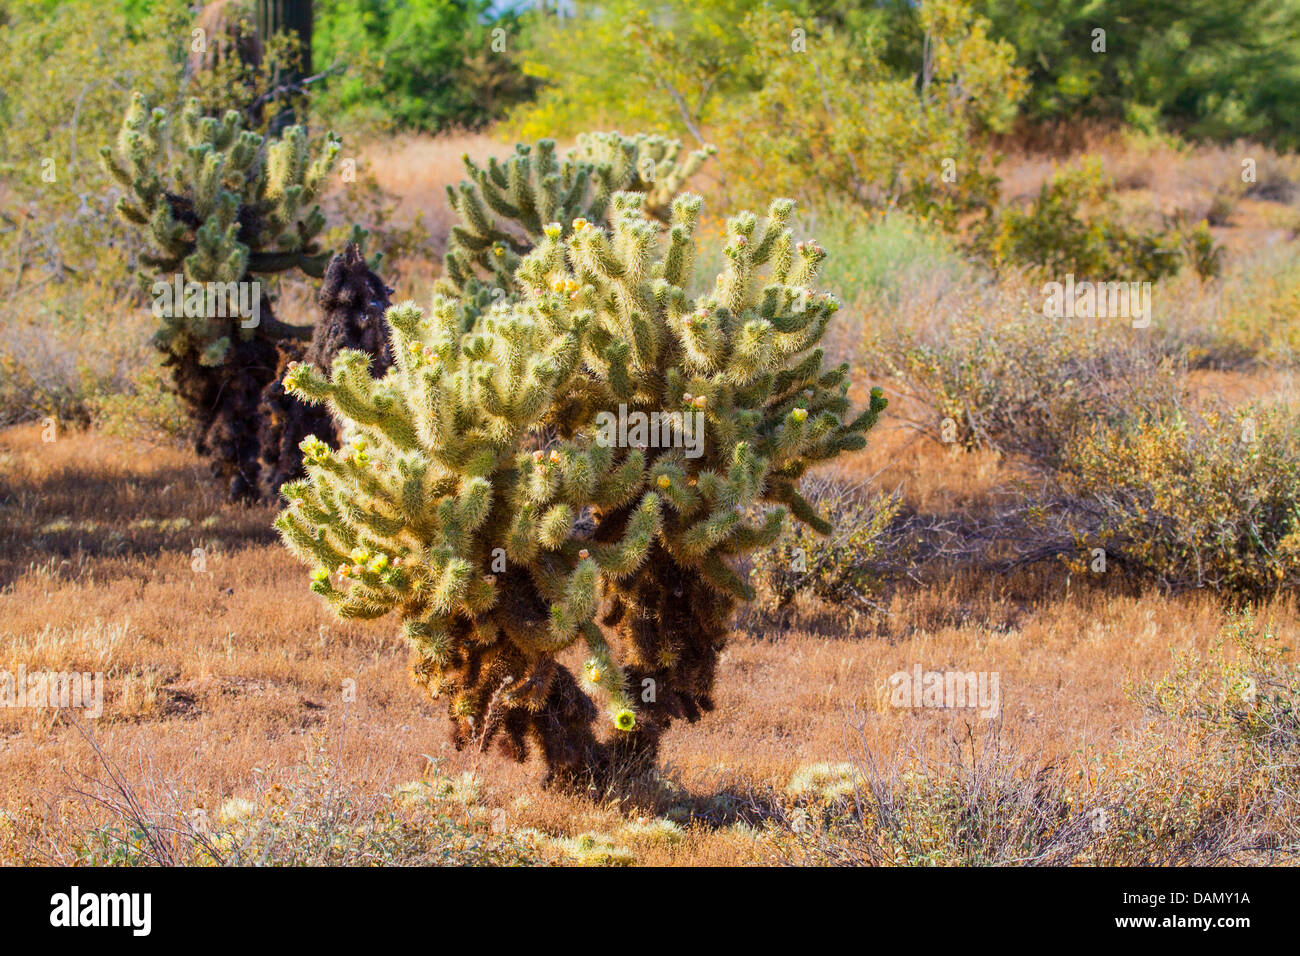 Teddy-bear cholla, Jumping Cholla, Silver cholla (Opuntia bigelovii, Cylindropuntia bigelovii), several plants, USA, Arizona, Phoenix Stock Photo